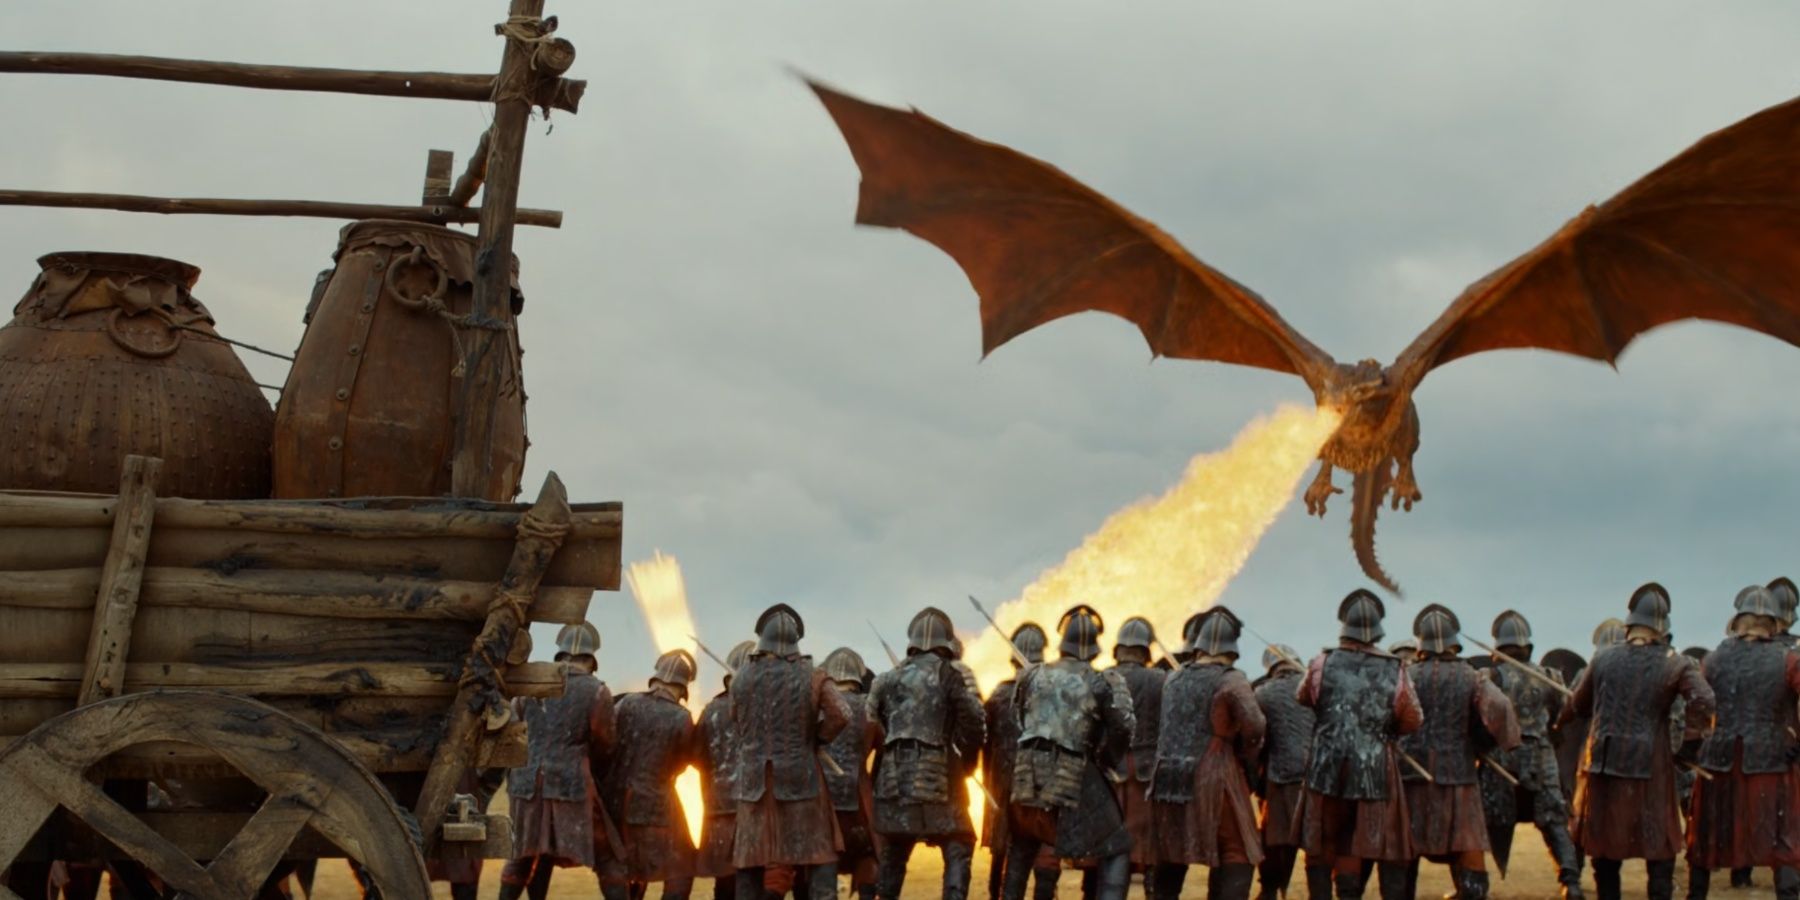 Drogon brucia gli arcieri in Game of Thrones.